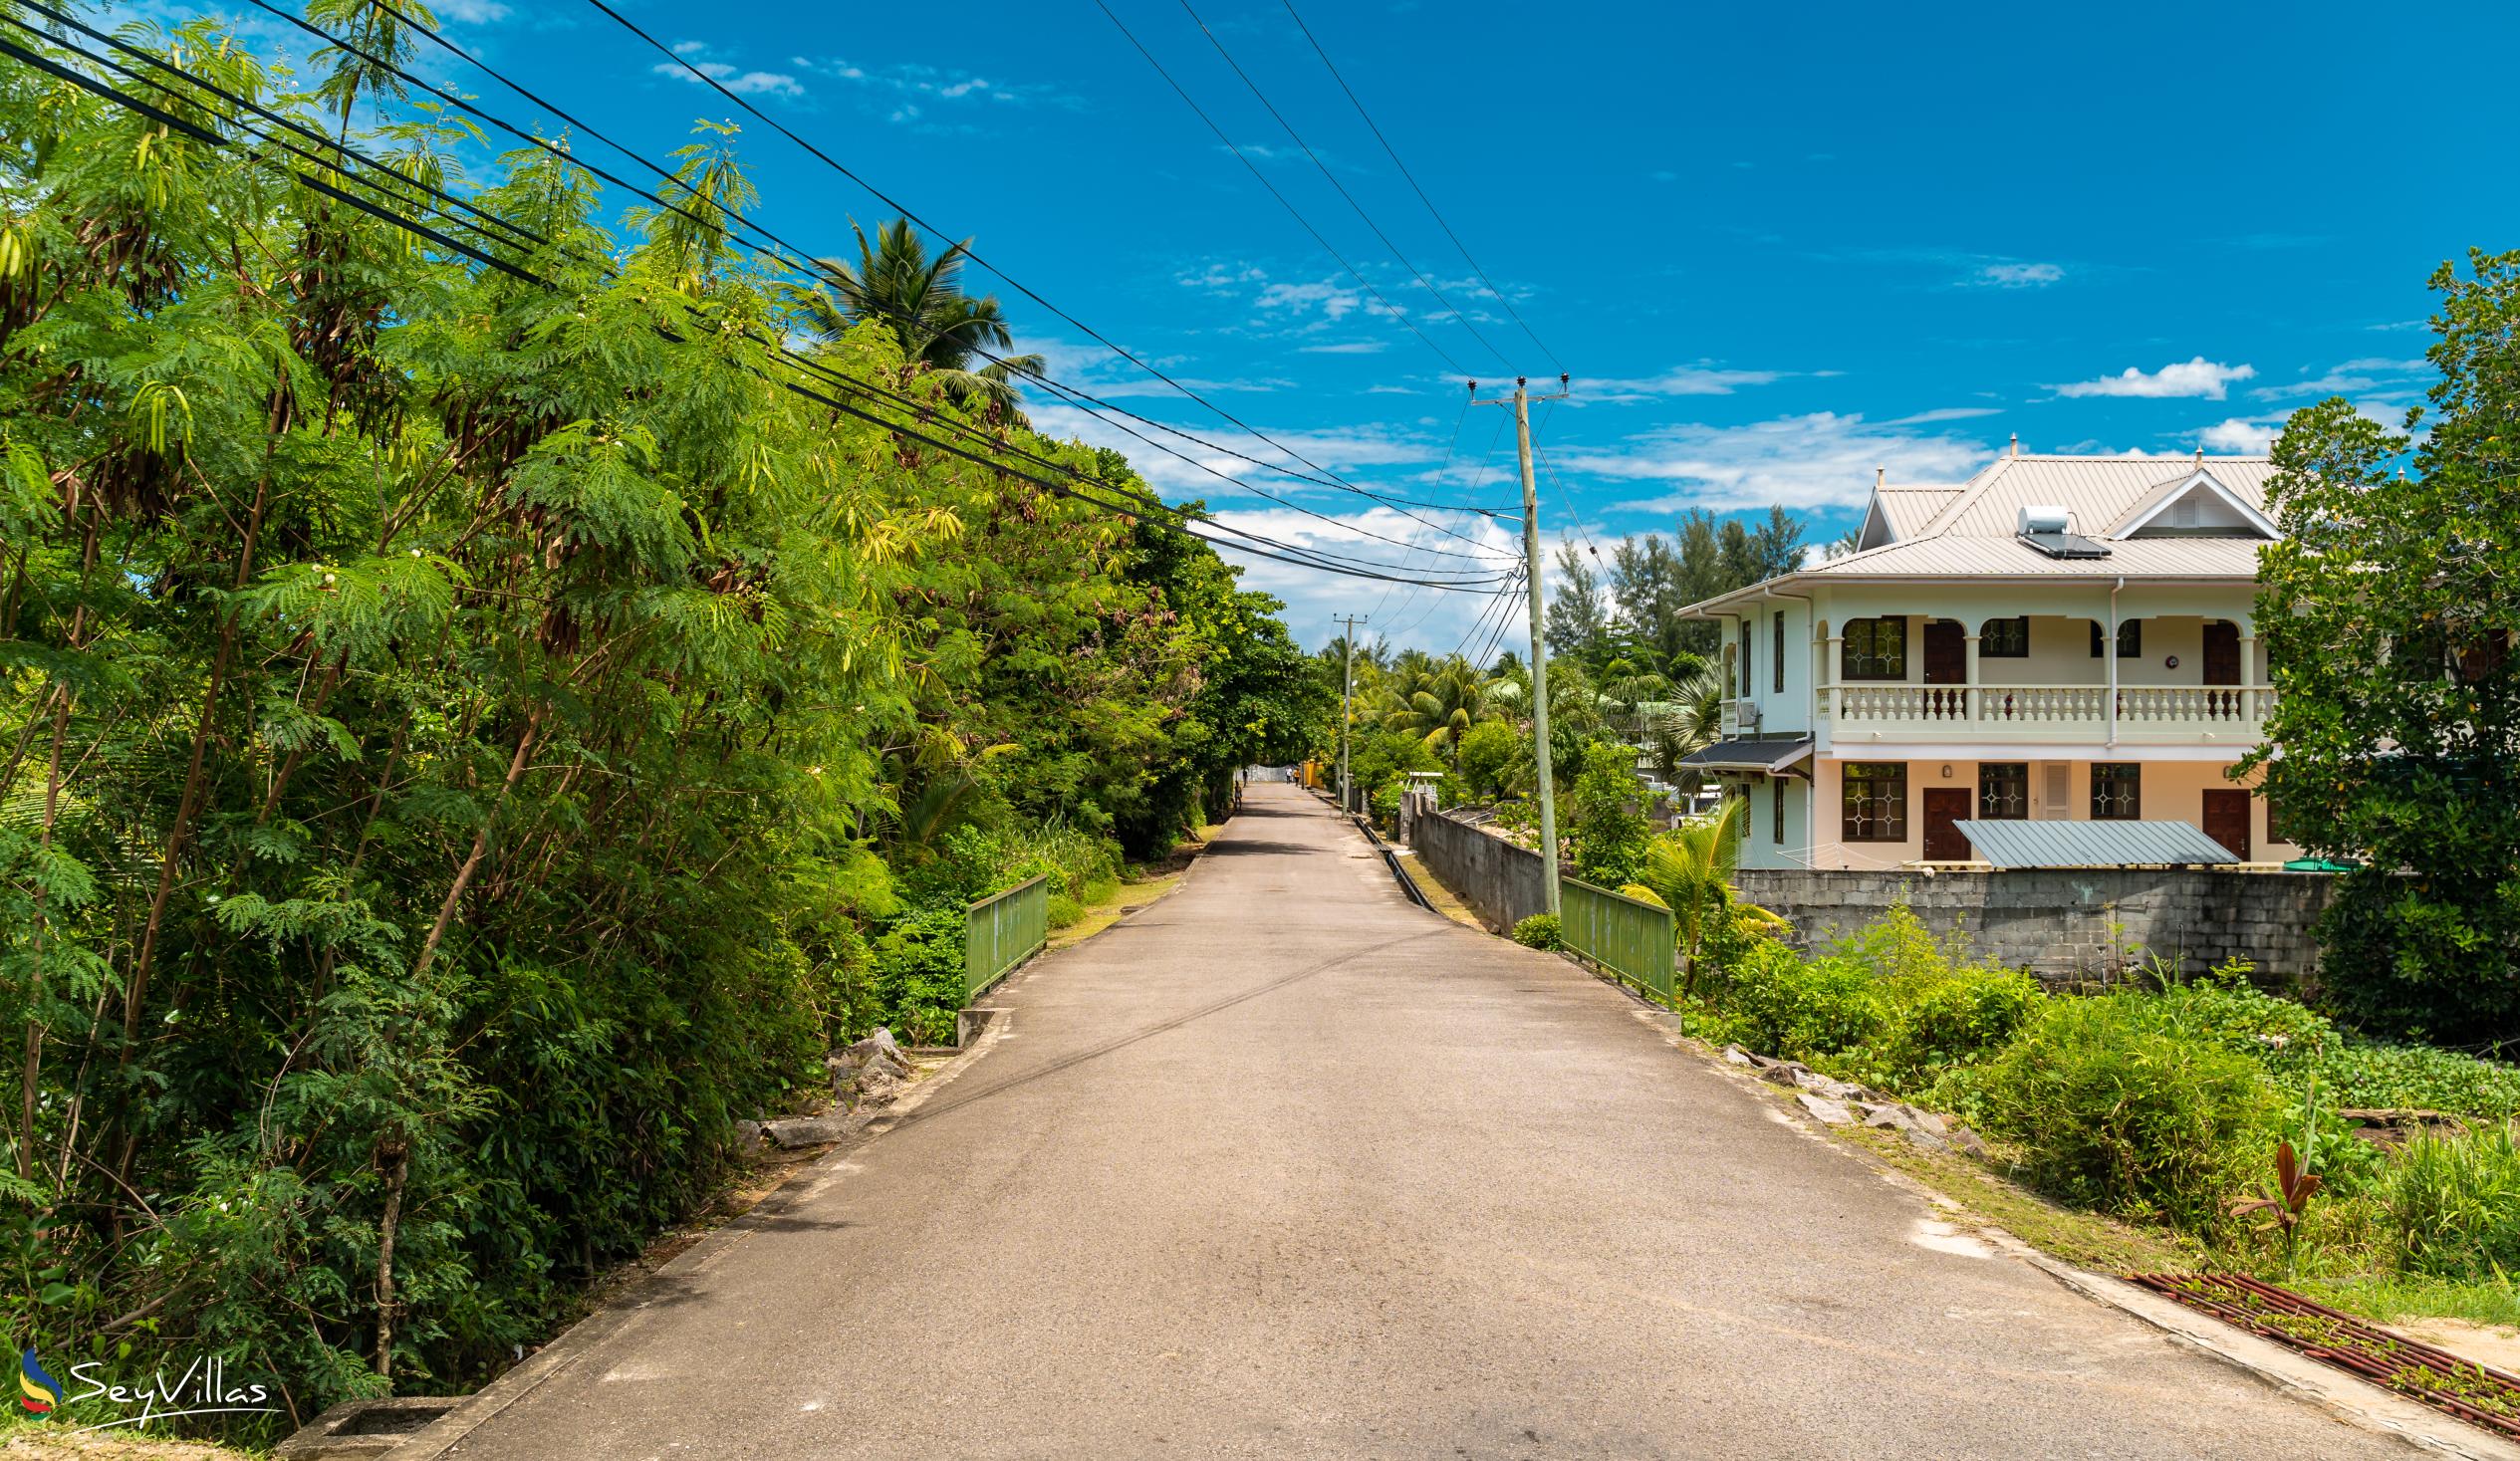 Foto 32: JAIDSS Holiday Apartments - Lage - Mahé (Seychellen)